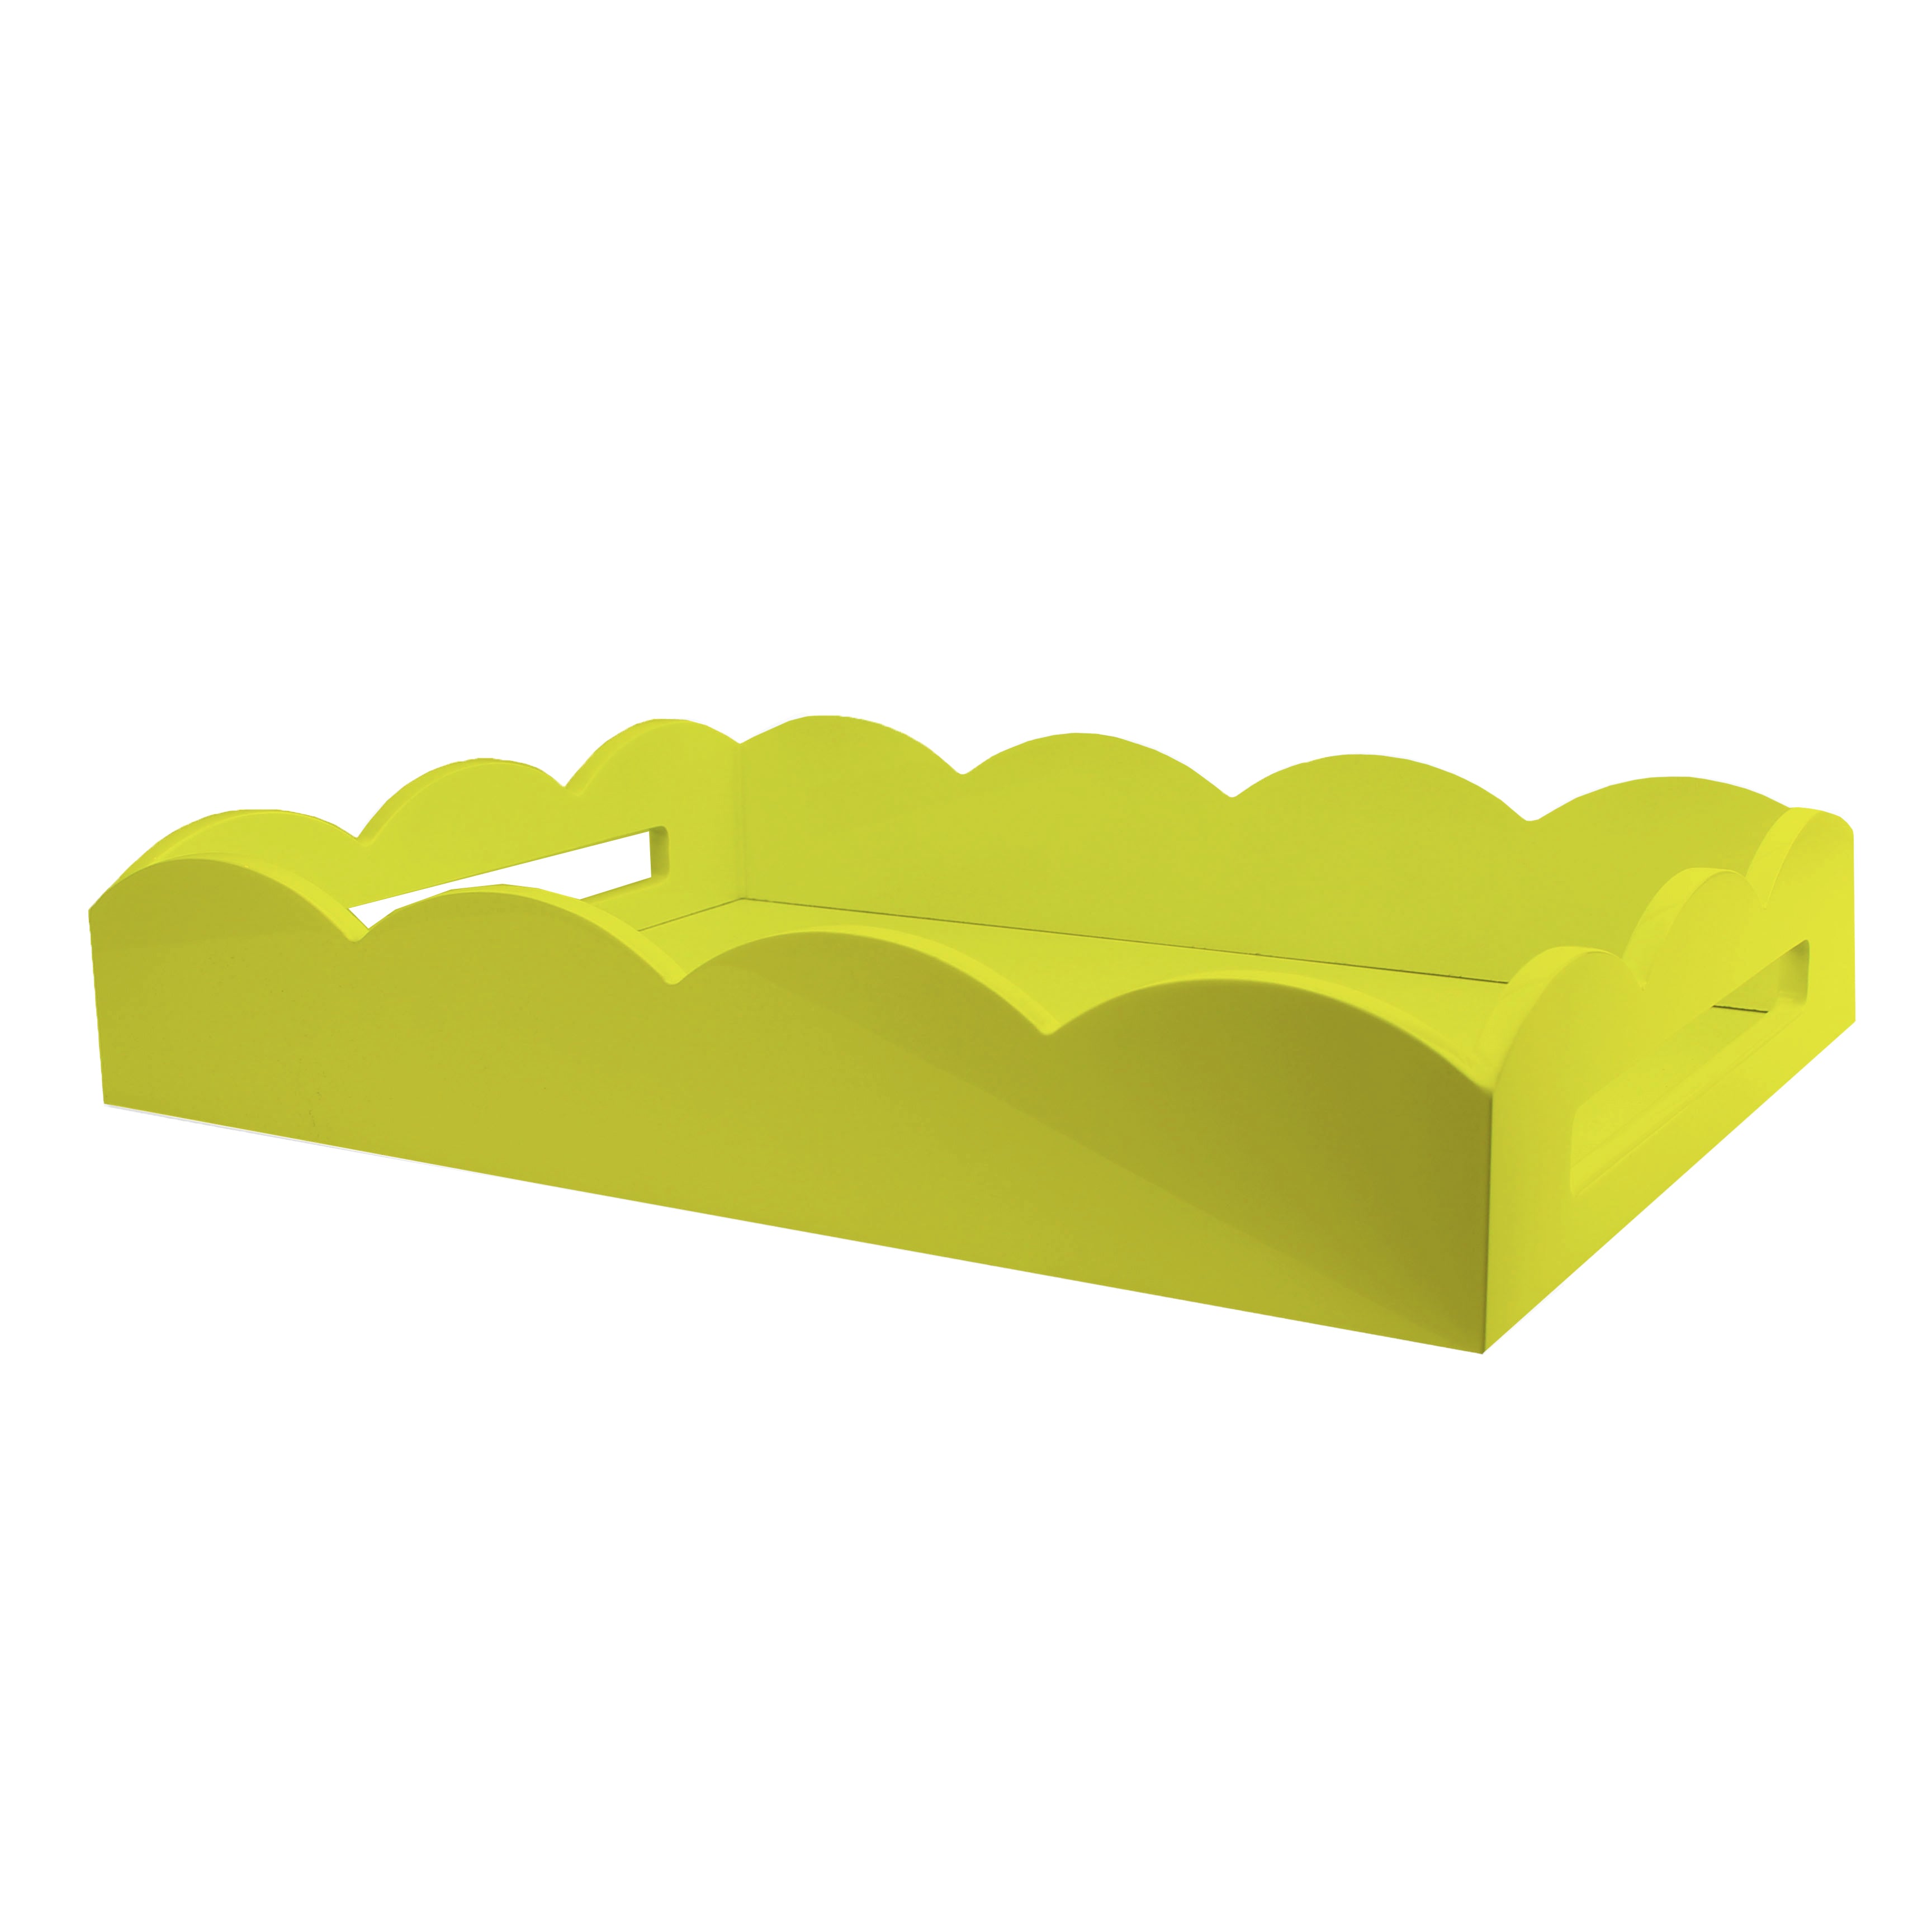 Scalloped tray | medium yellow | Osski